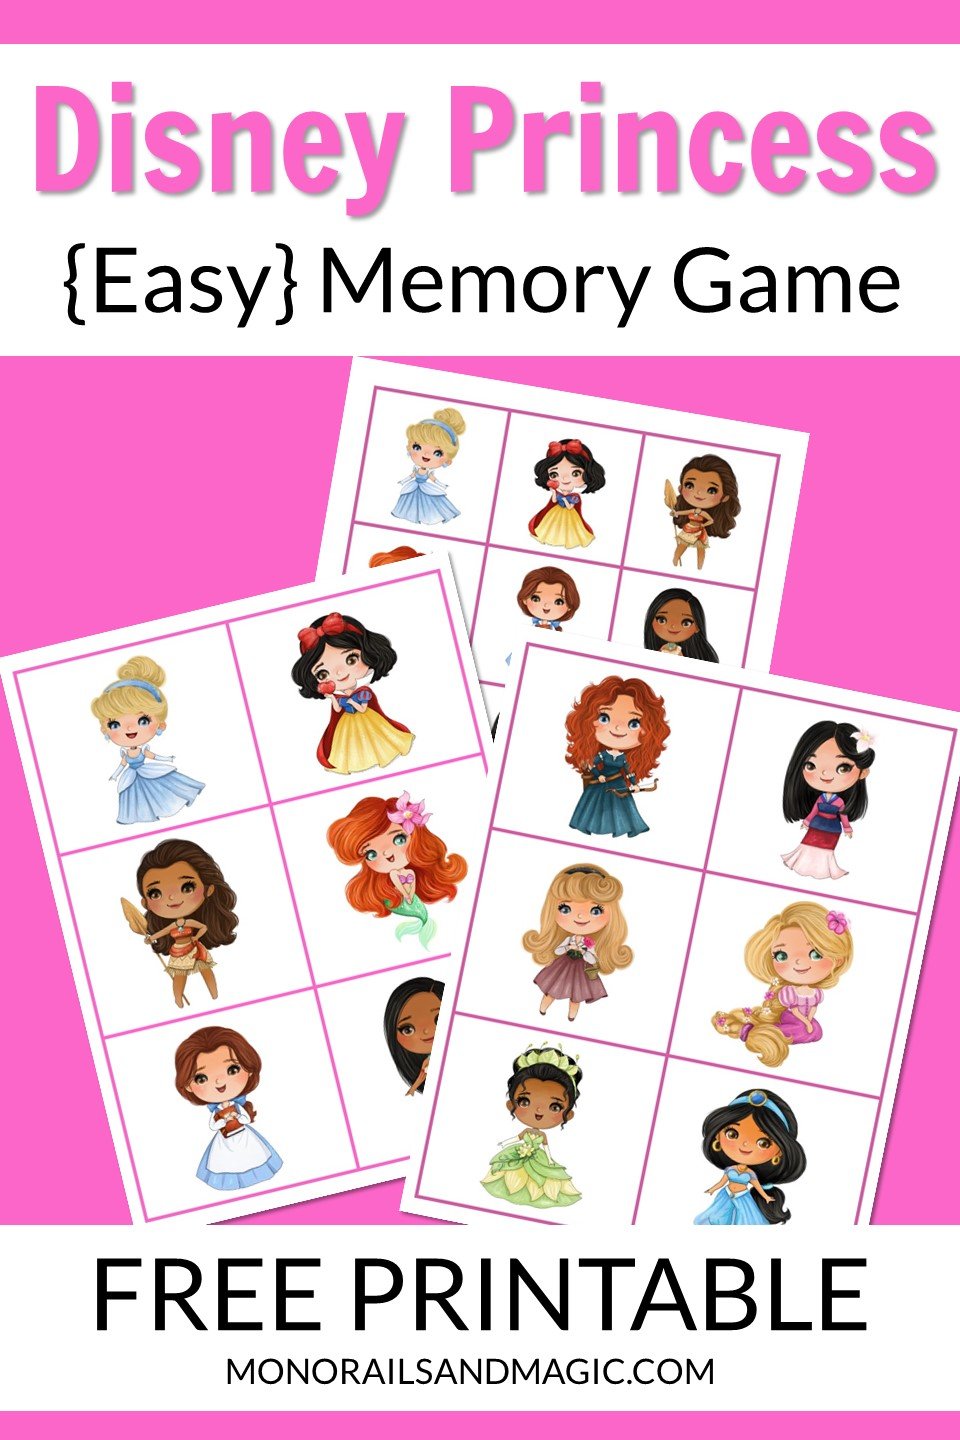 Free printable Disney princess memory game for kids.